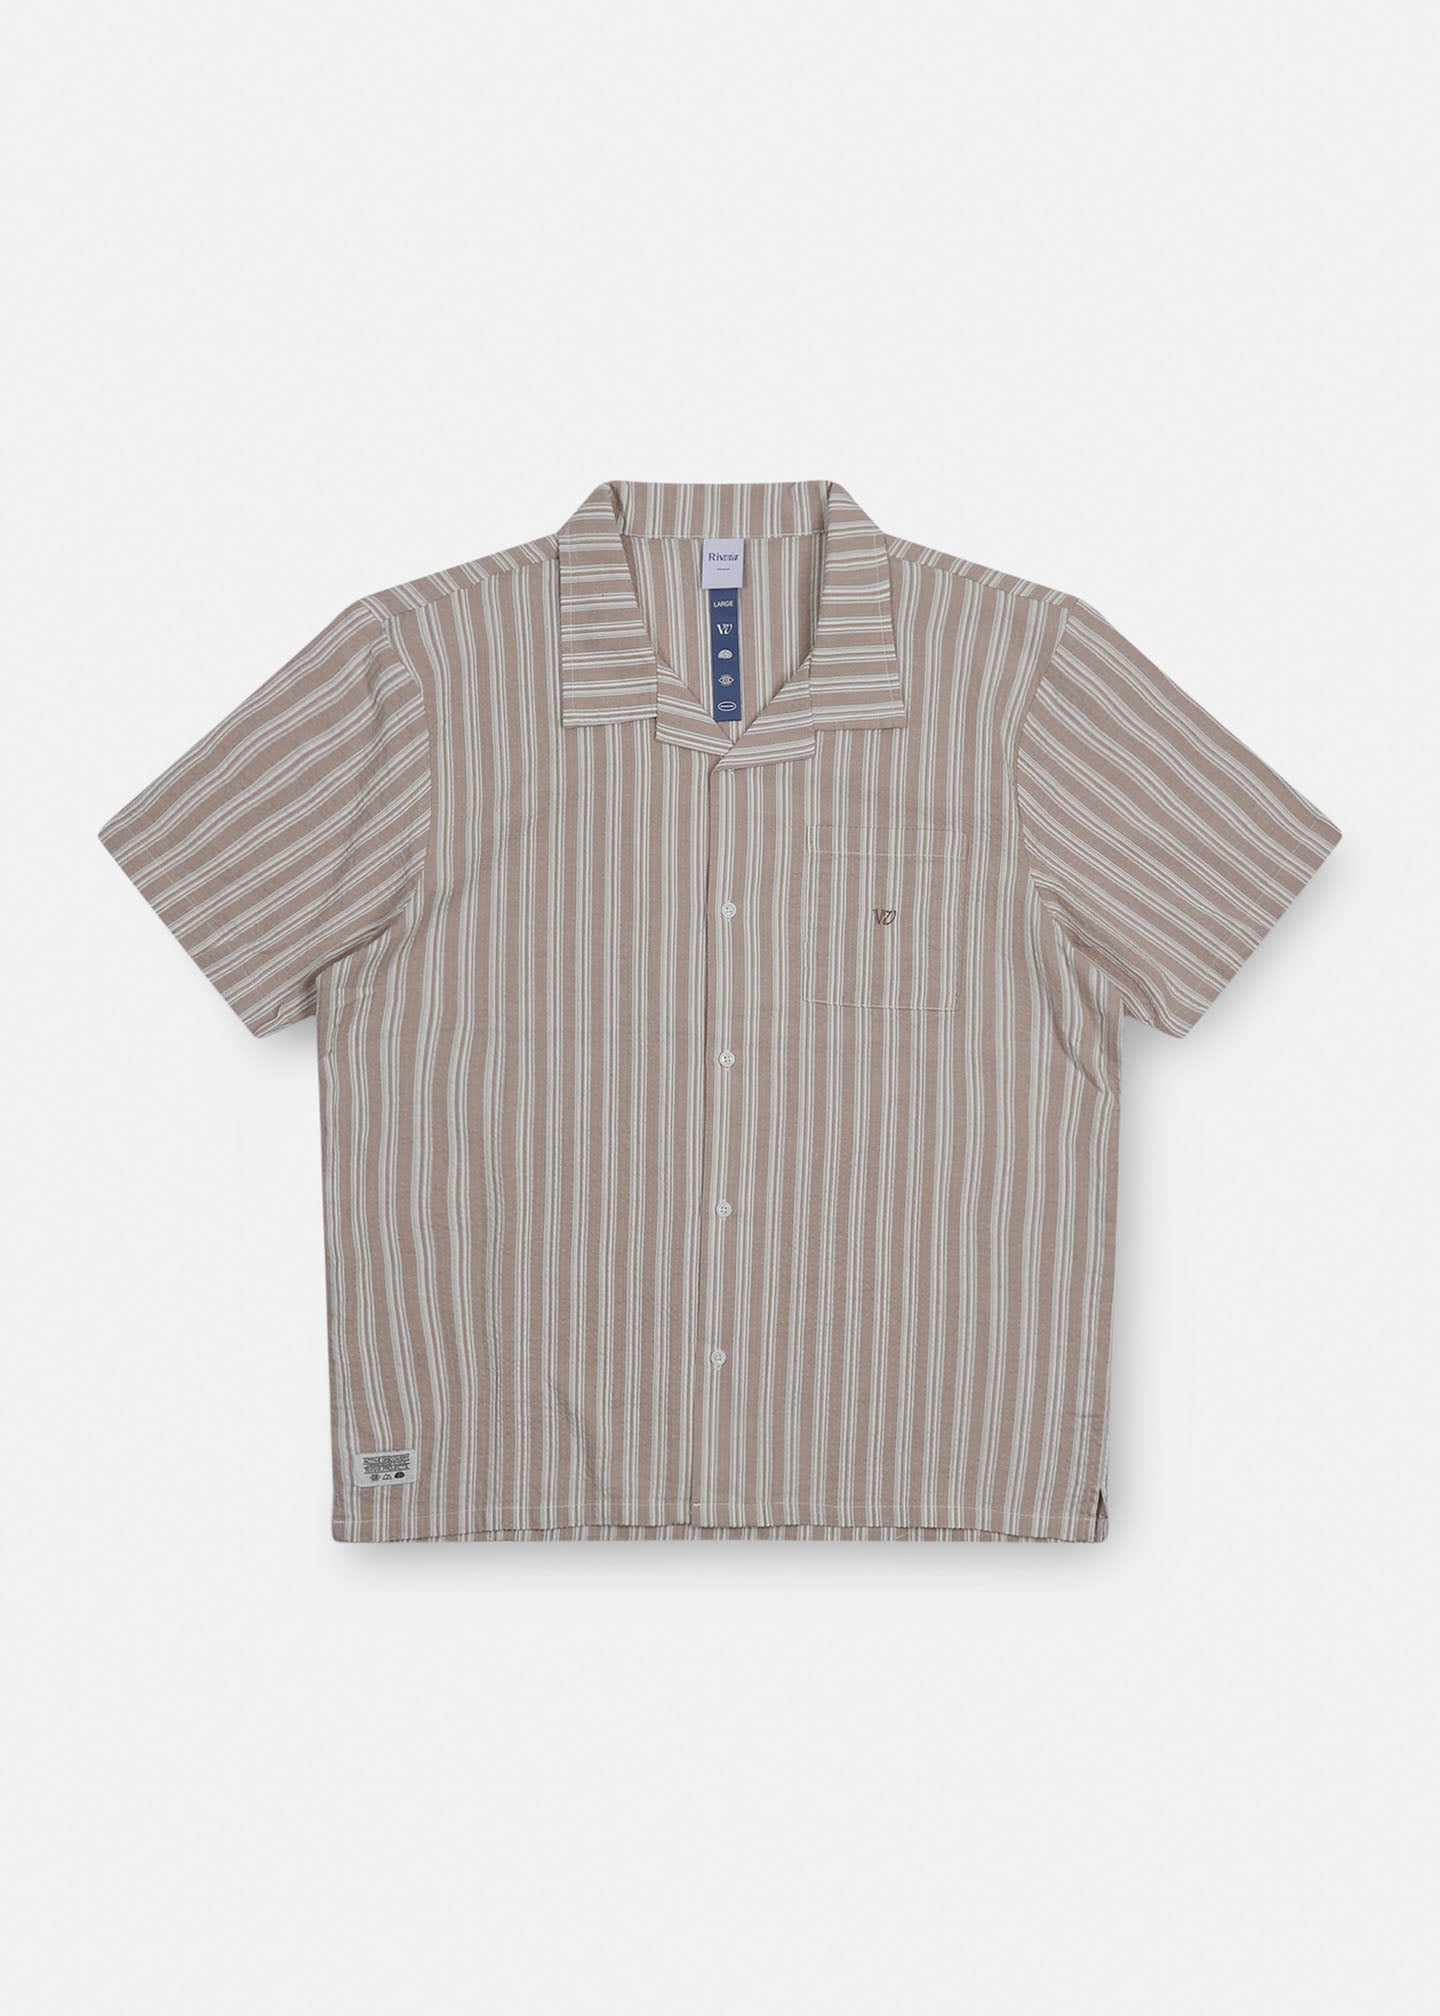 VIRIA- Stripe Short Sleeve Top 